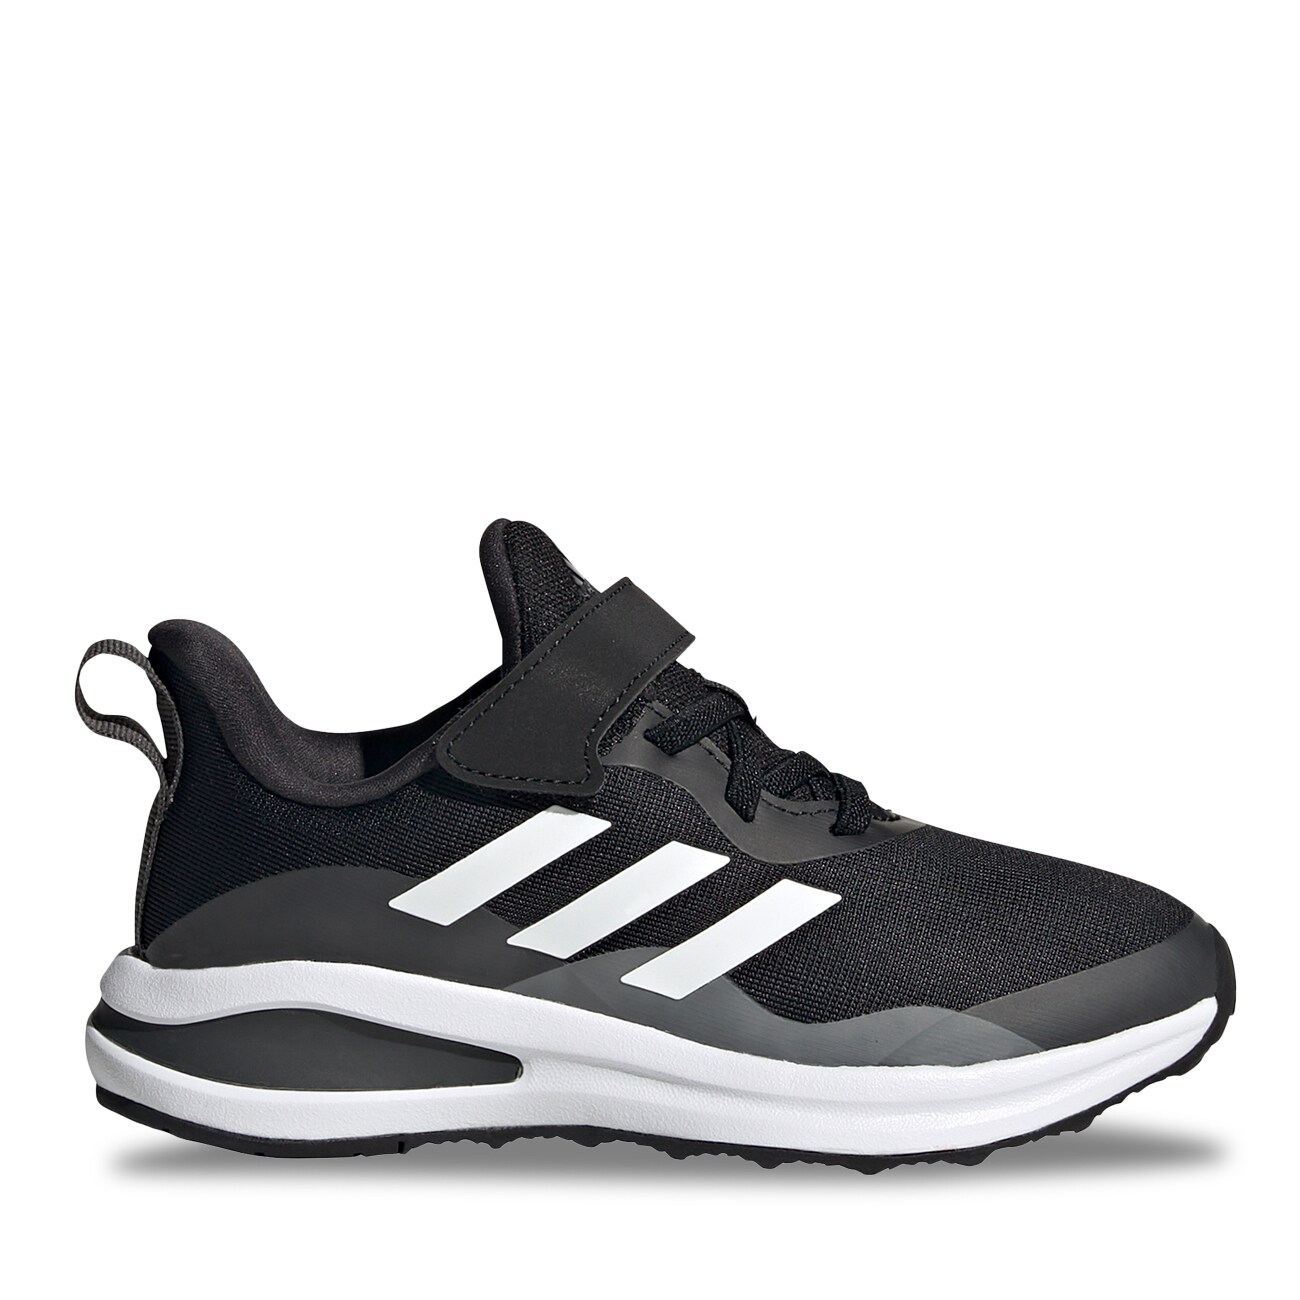 Adidas Youth Boy's Fortarun El C Running Shoe | The Shoe Company